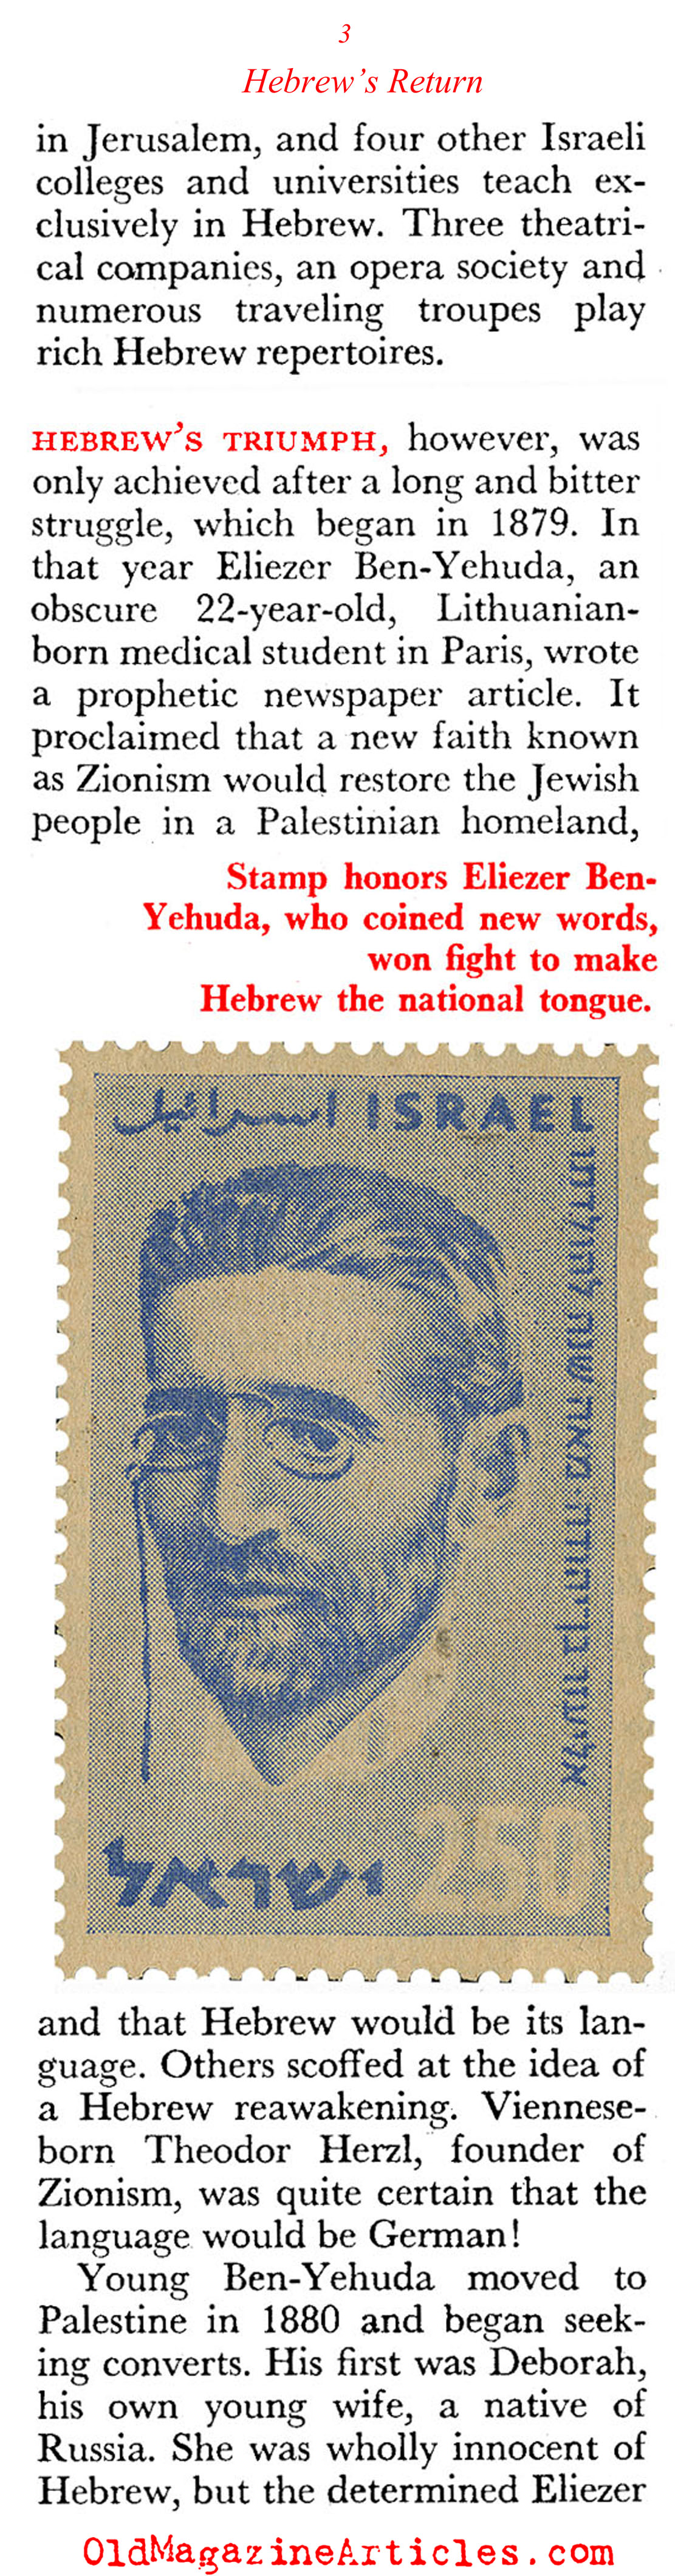 Adapting Hebrew for the Modern Age (Coronet Magazine, 1960)